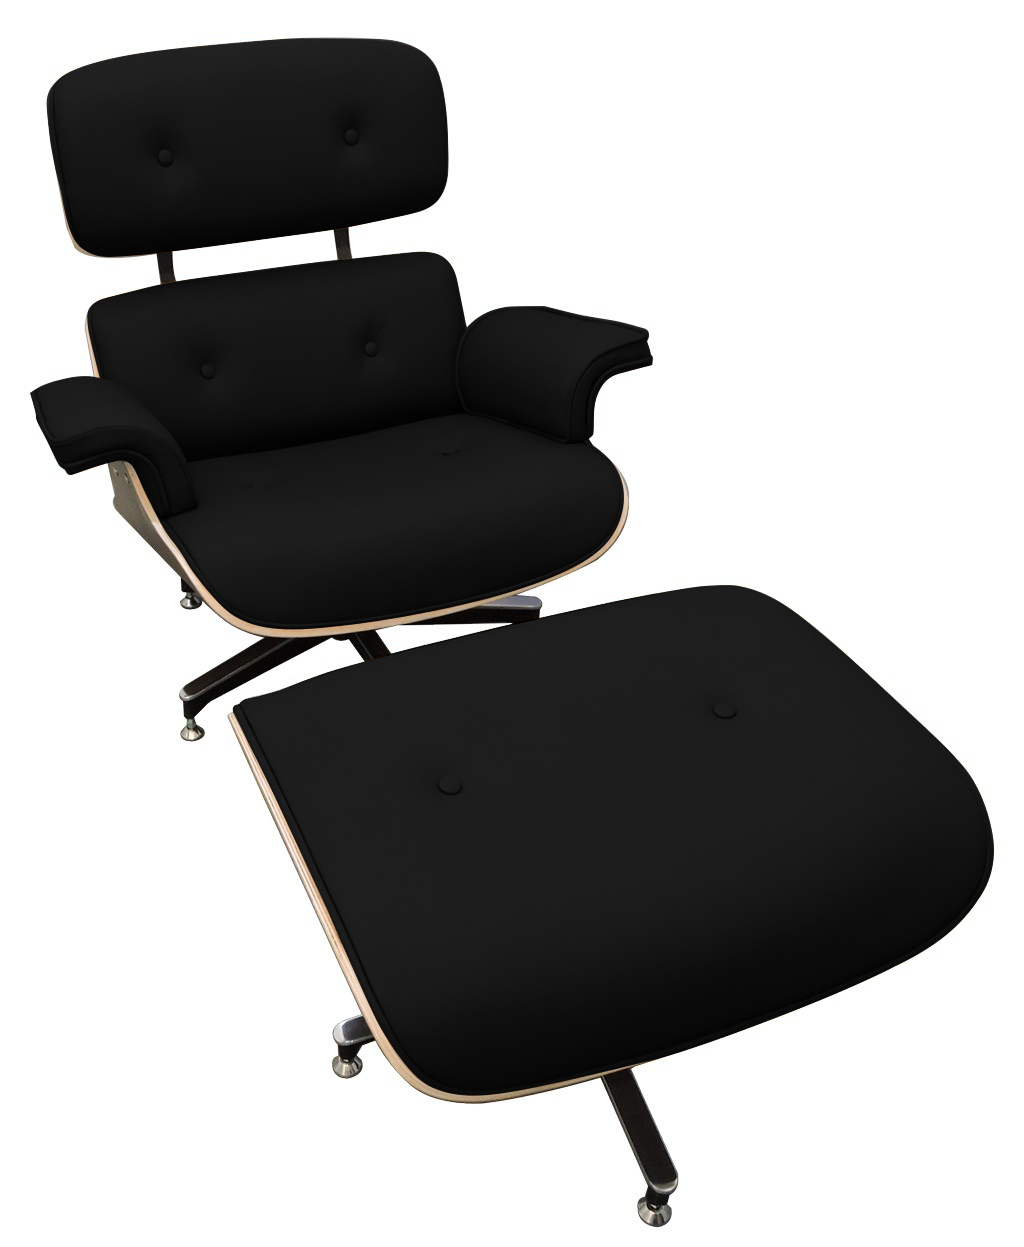 Poltrona Eames Lounge Chair Com Puff - Vinil Preto